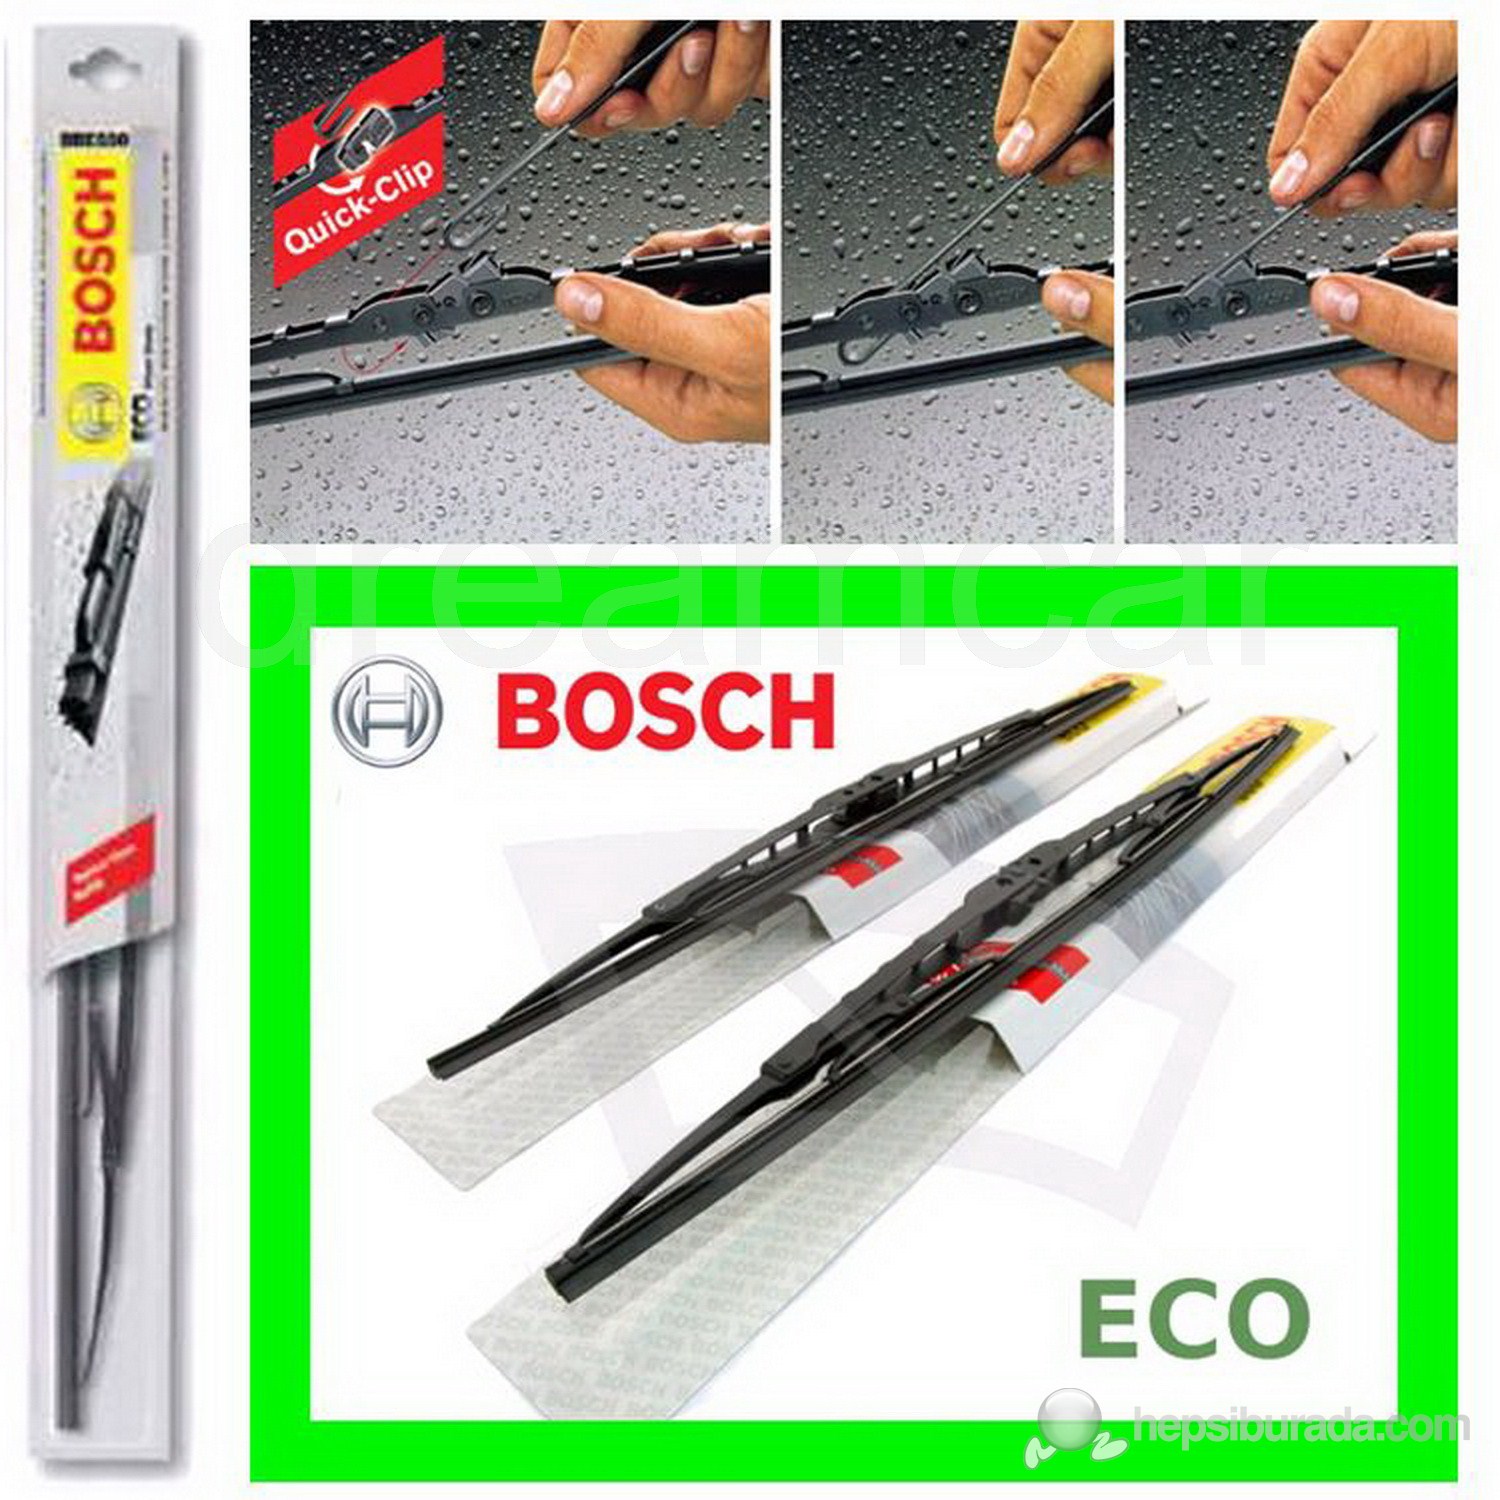 Bosch Eco Universal Quick-Clip Telli Grafitili Silecek 45 Cm. 1 Adet 3397004668